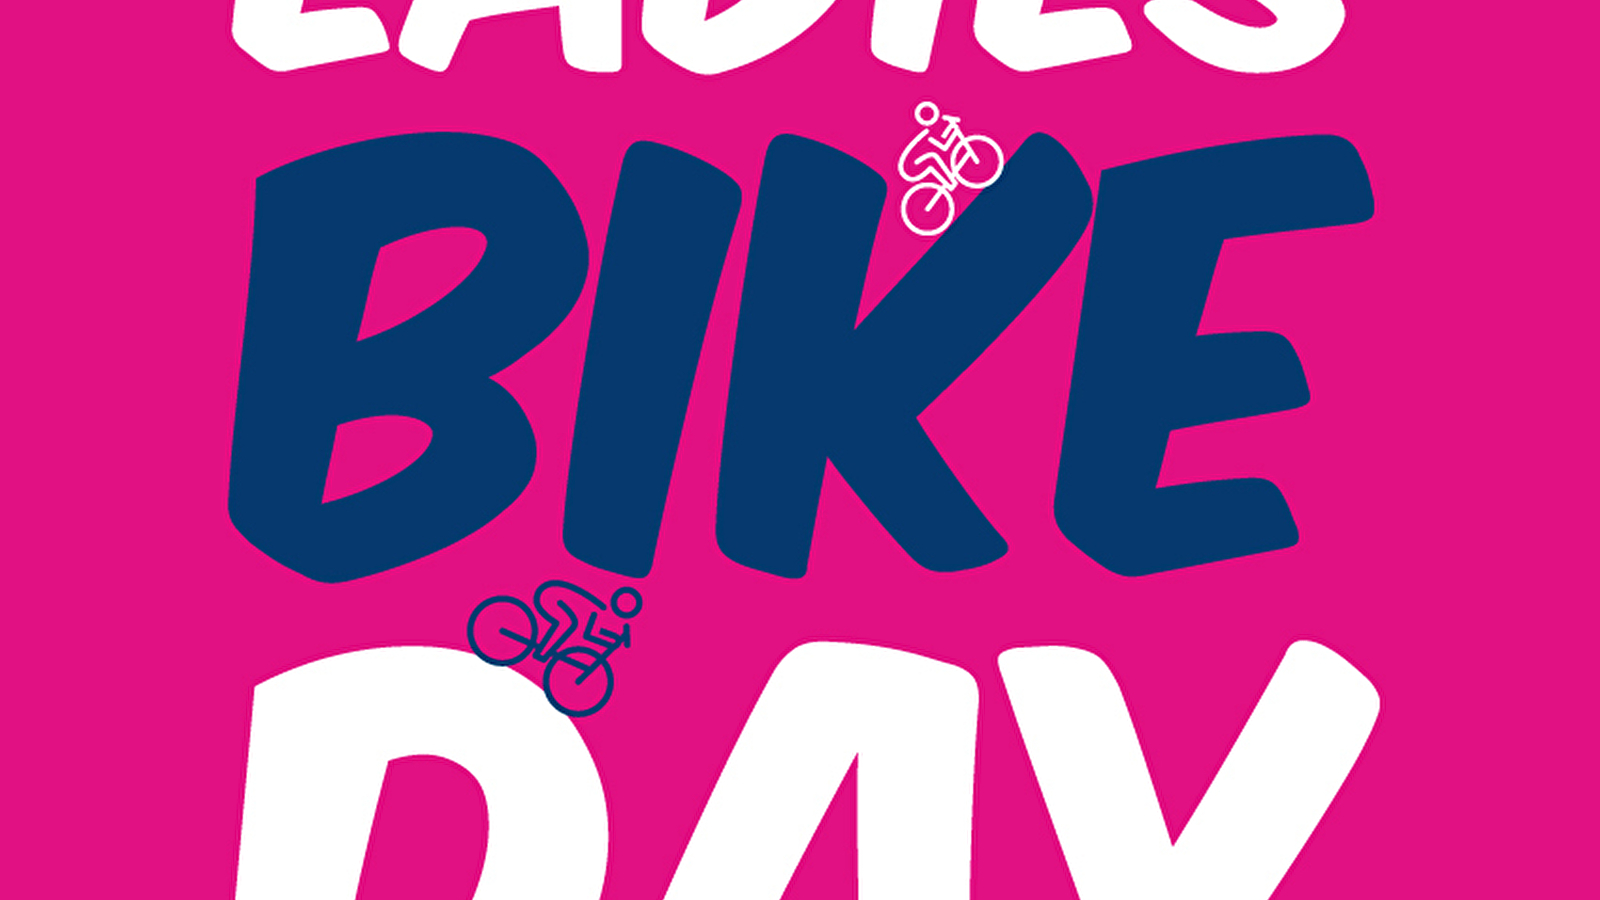 Ladies bike day